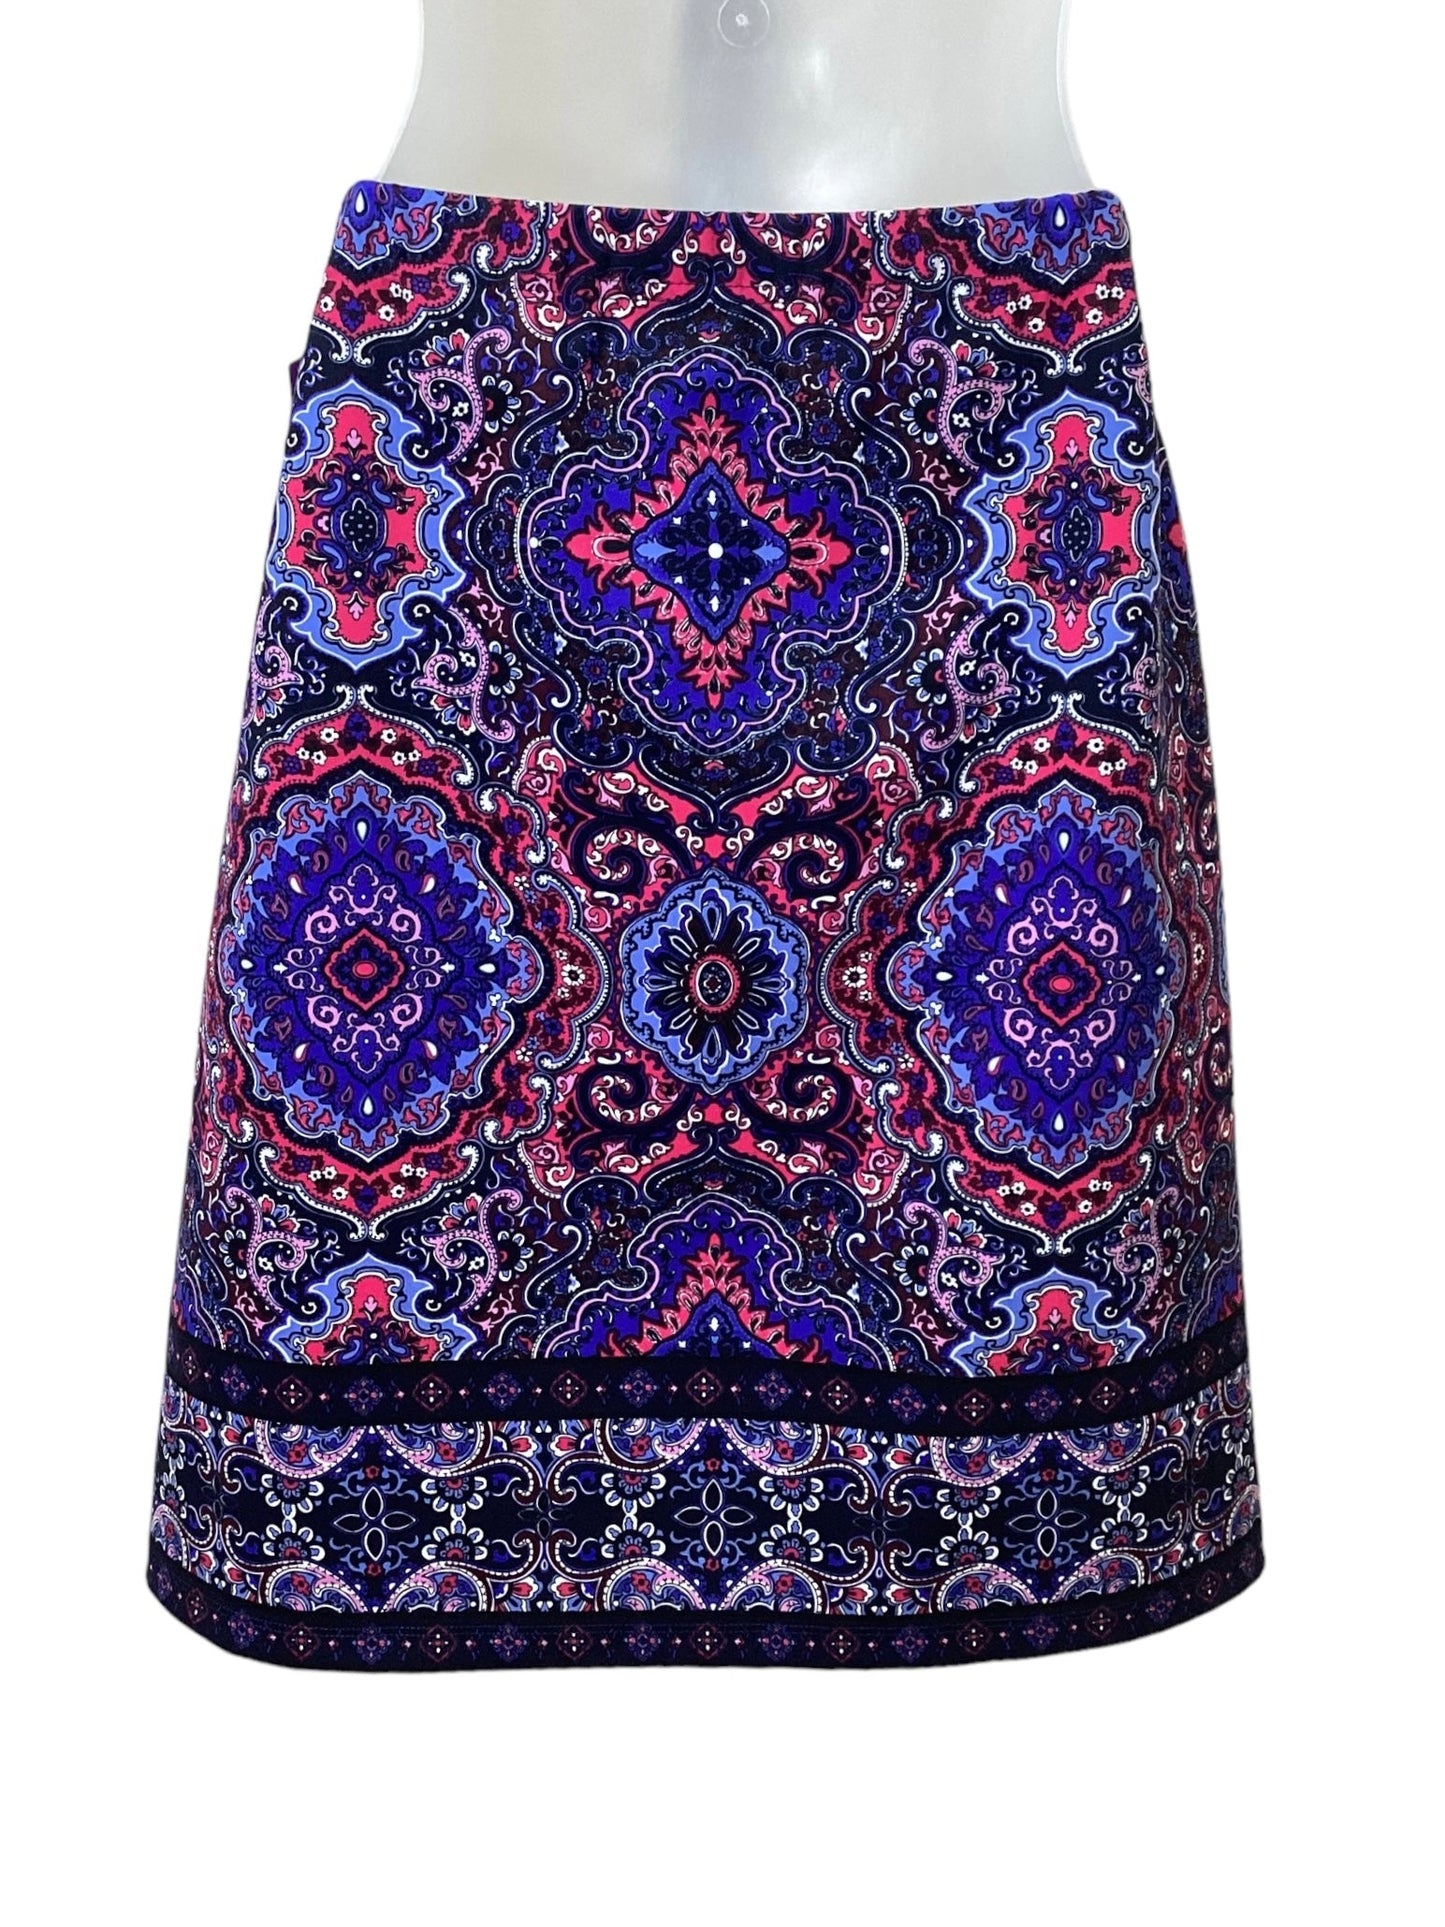 Skirt Midi By Talbots  Size: S